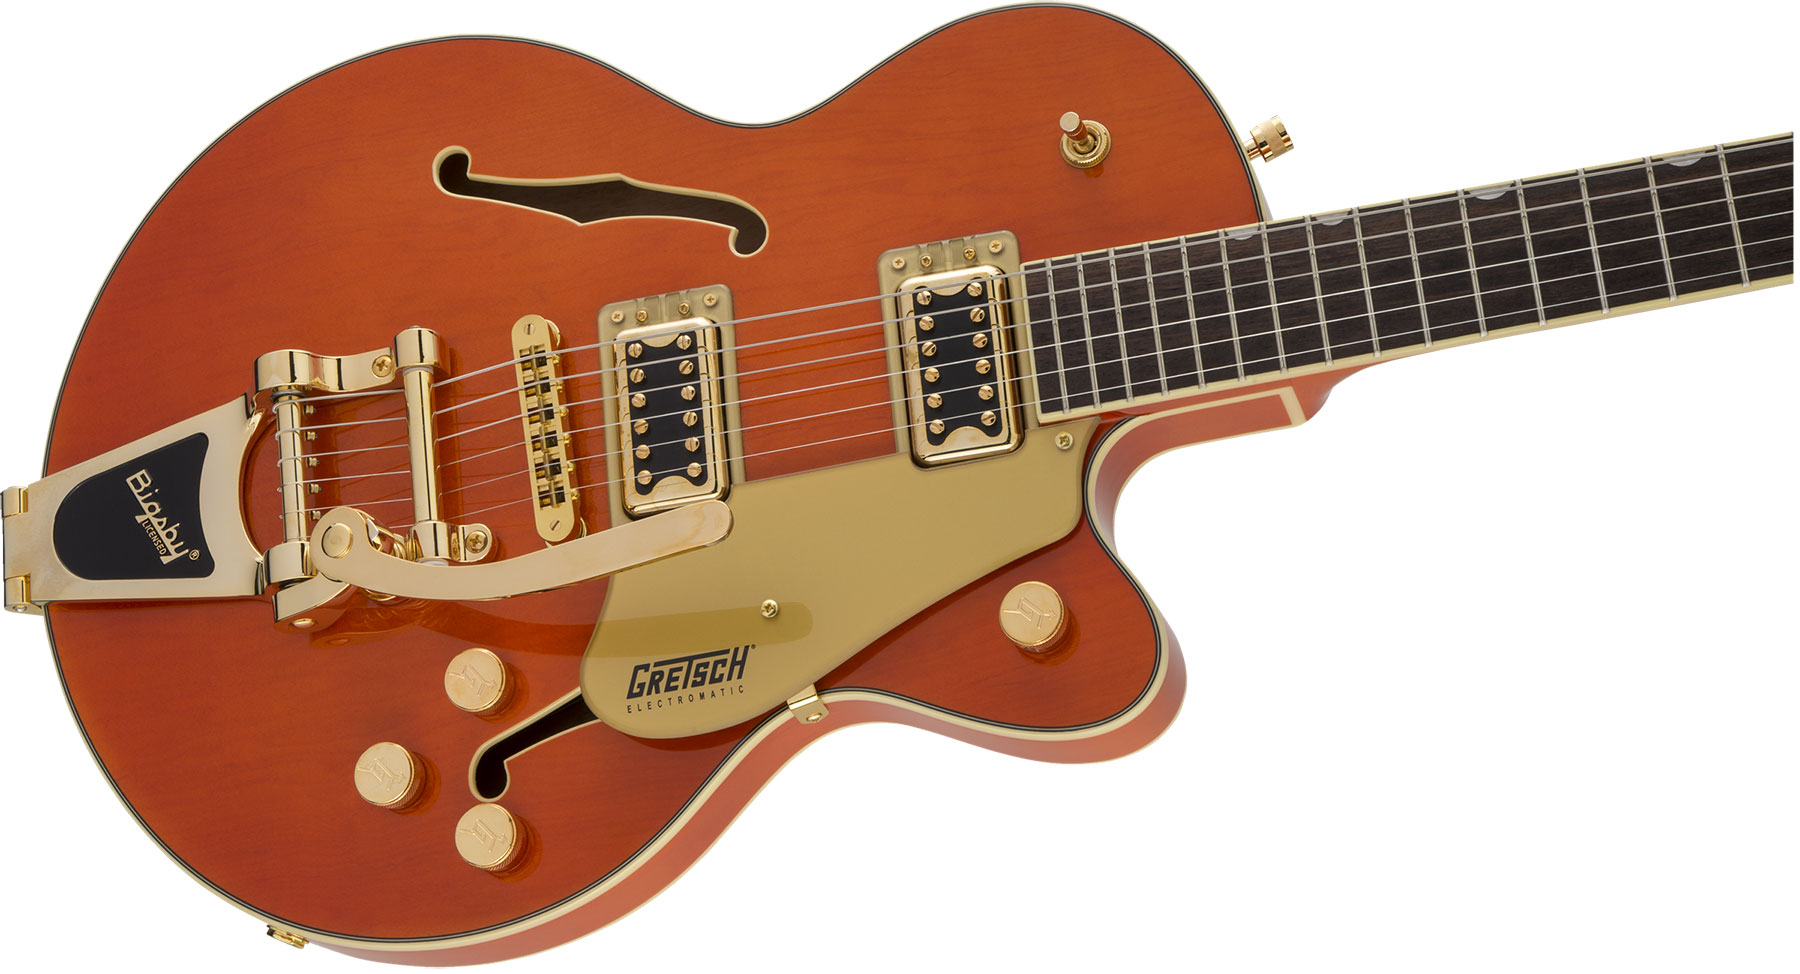 Gretsch G5655tg Electromatic Center Block Jr. Hh Bigsby Lau - Orange Stain - Semi-hollow electric guitar - Variation 2